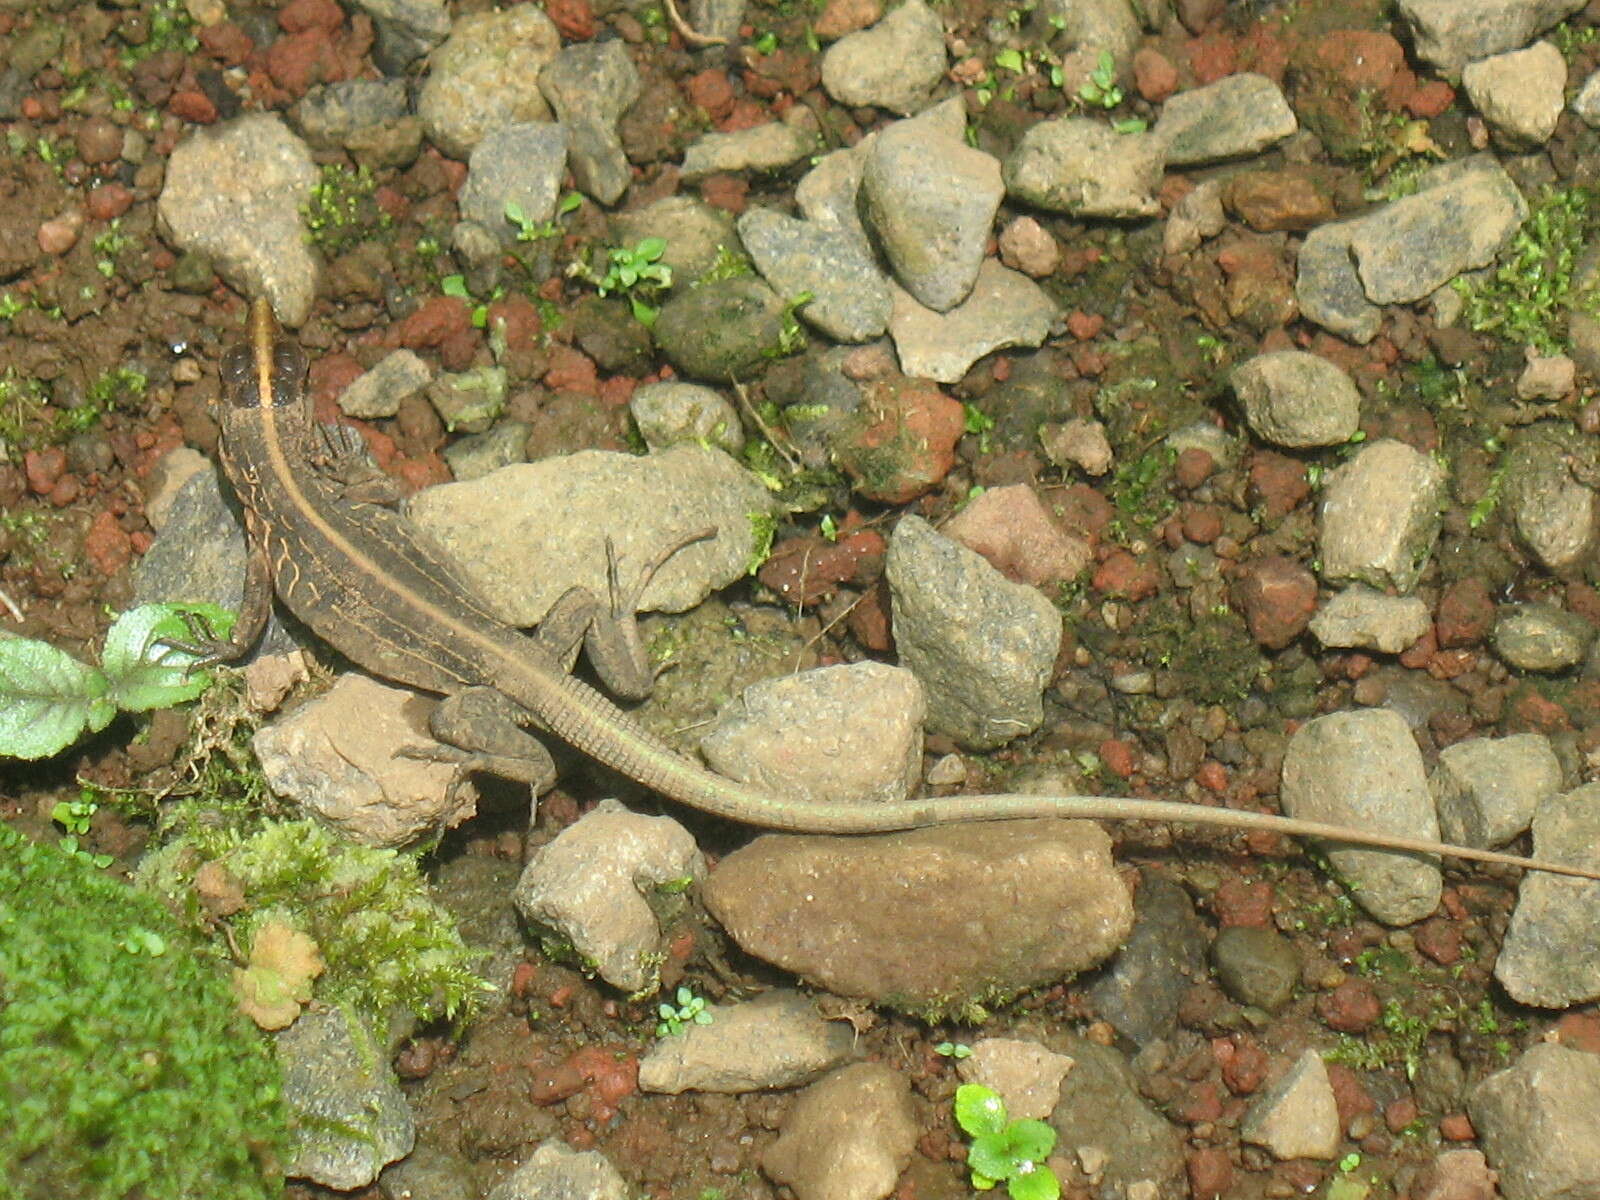 Image of Ameiva Lizard